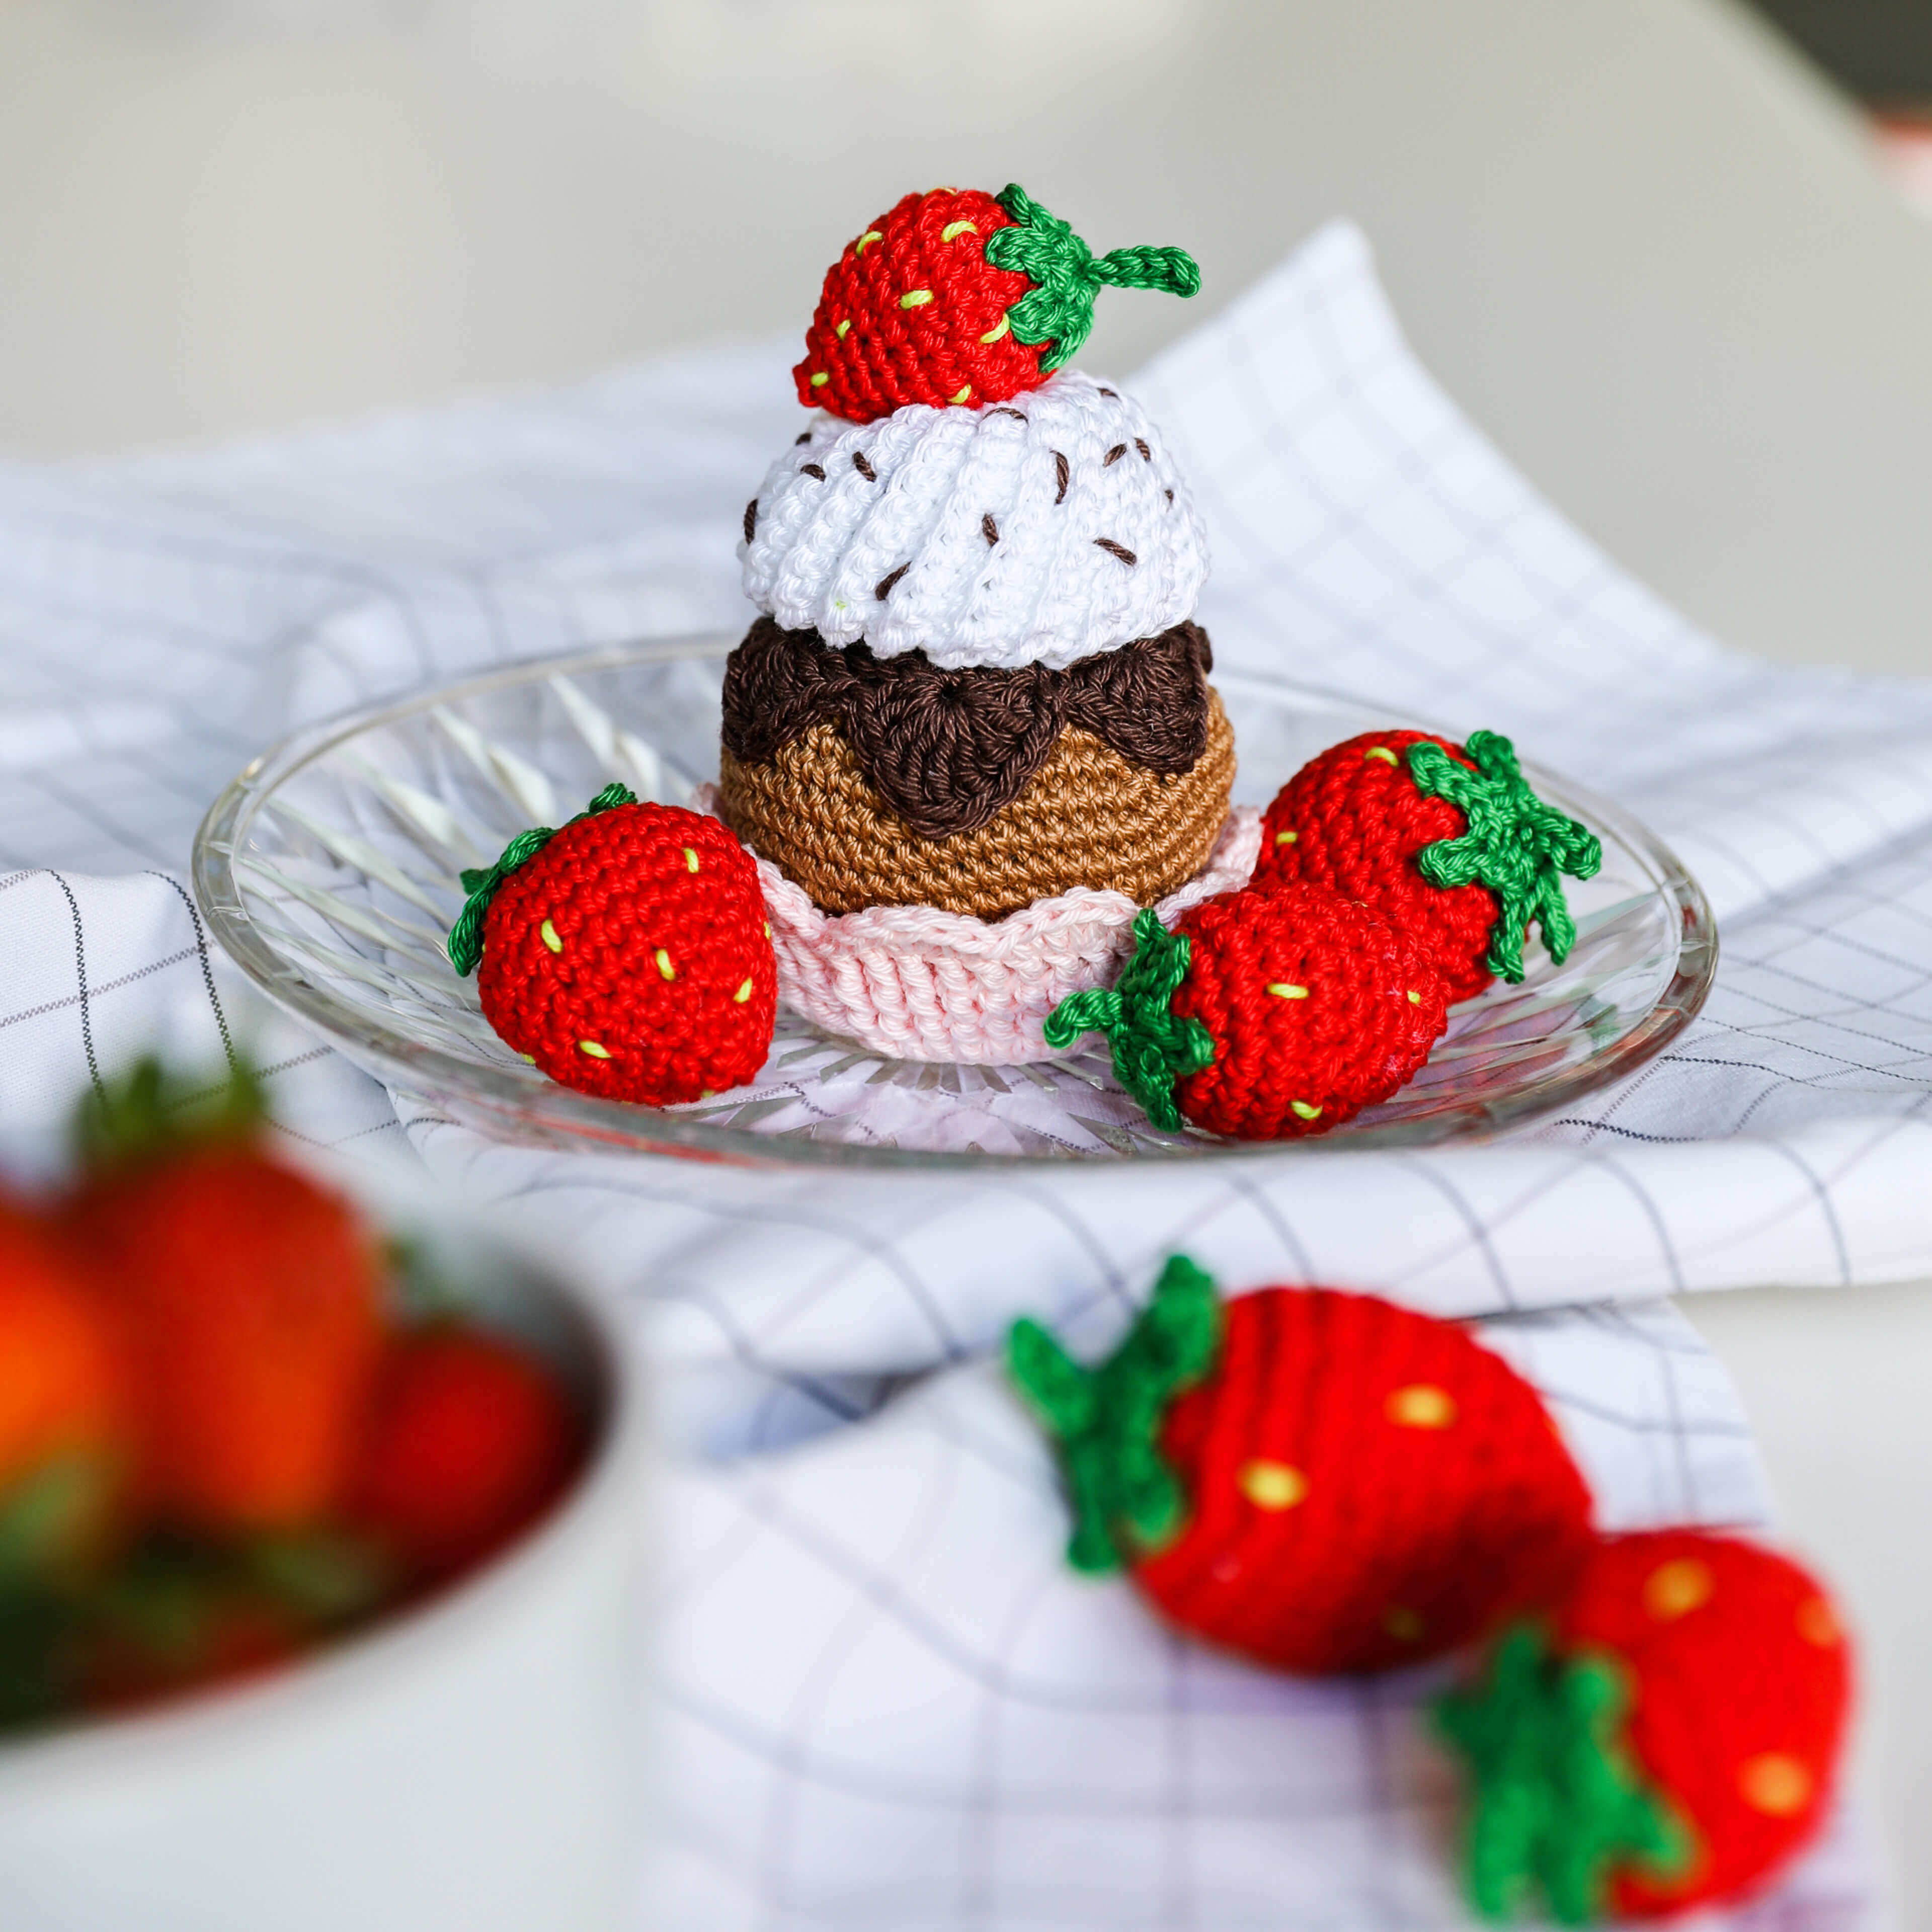 Strawberries and Strawberry Cupcake